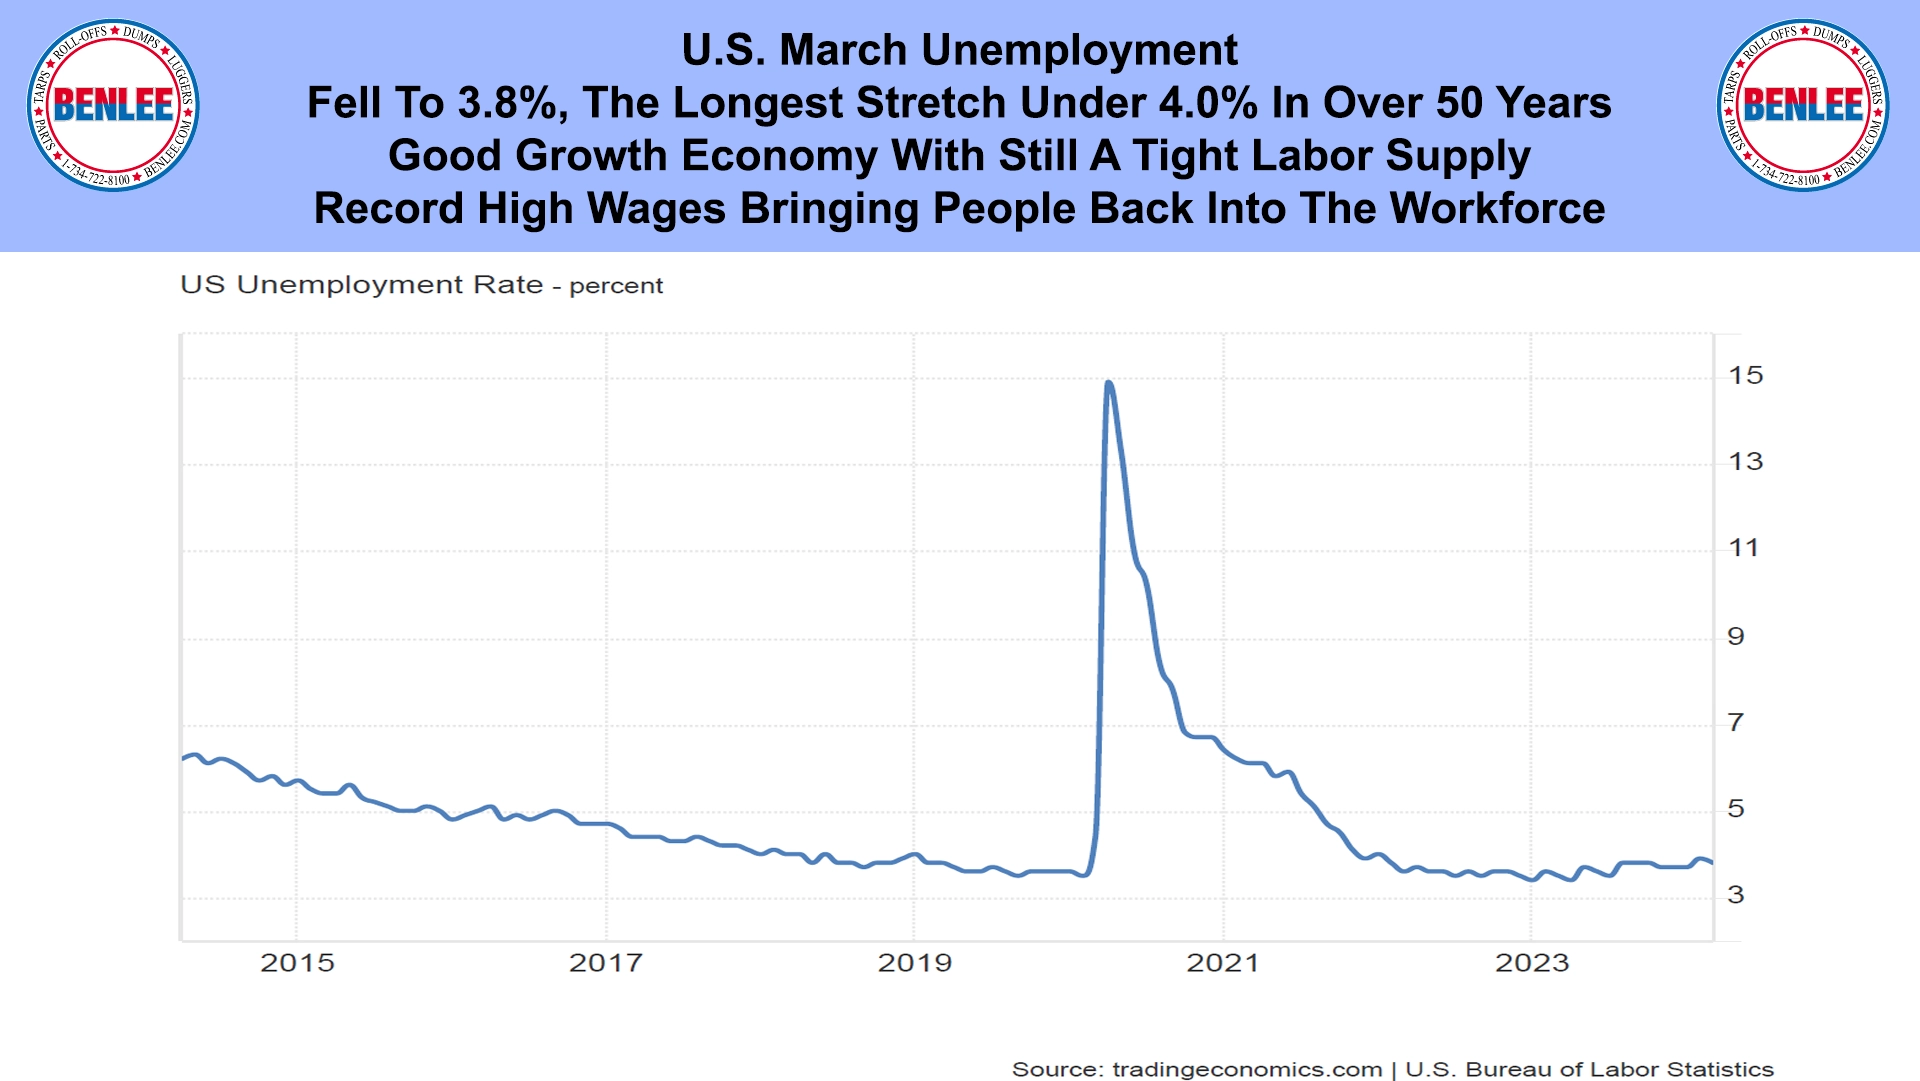 U.S. March Unemployment